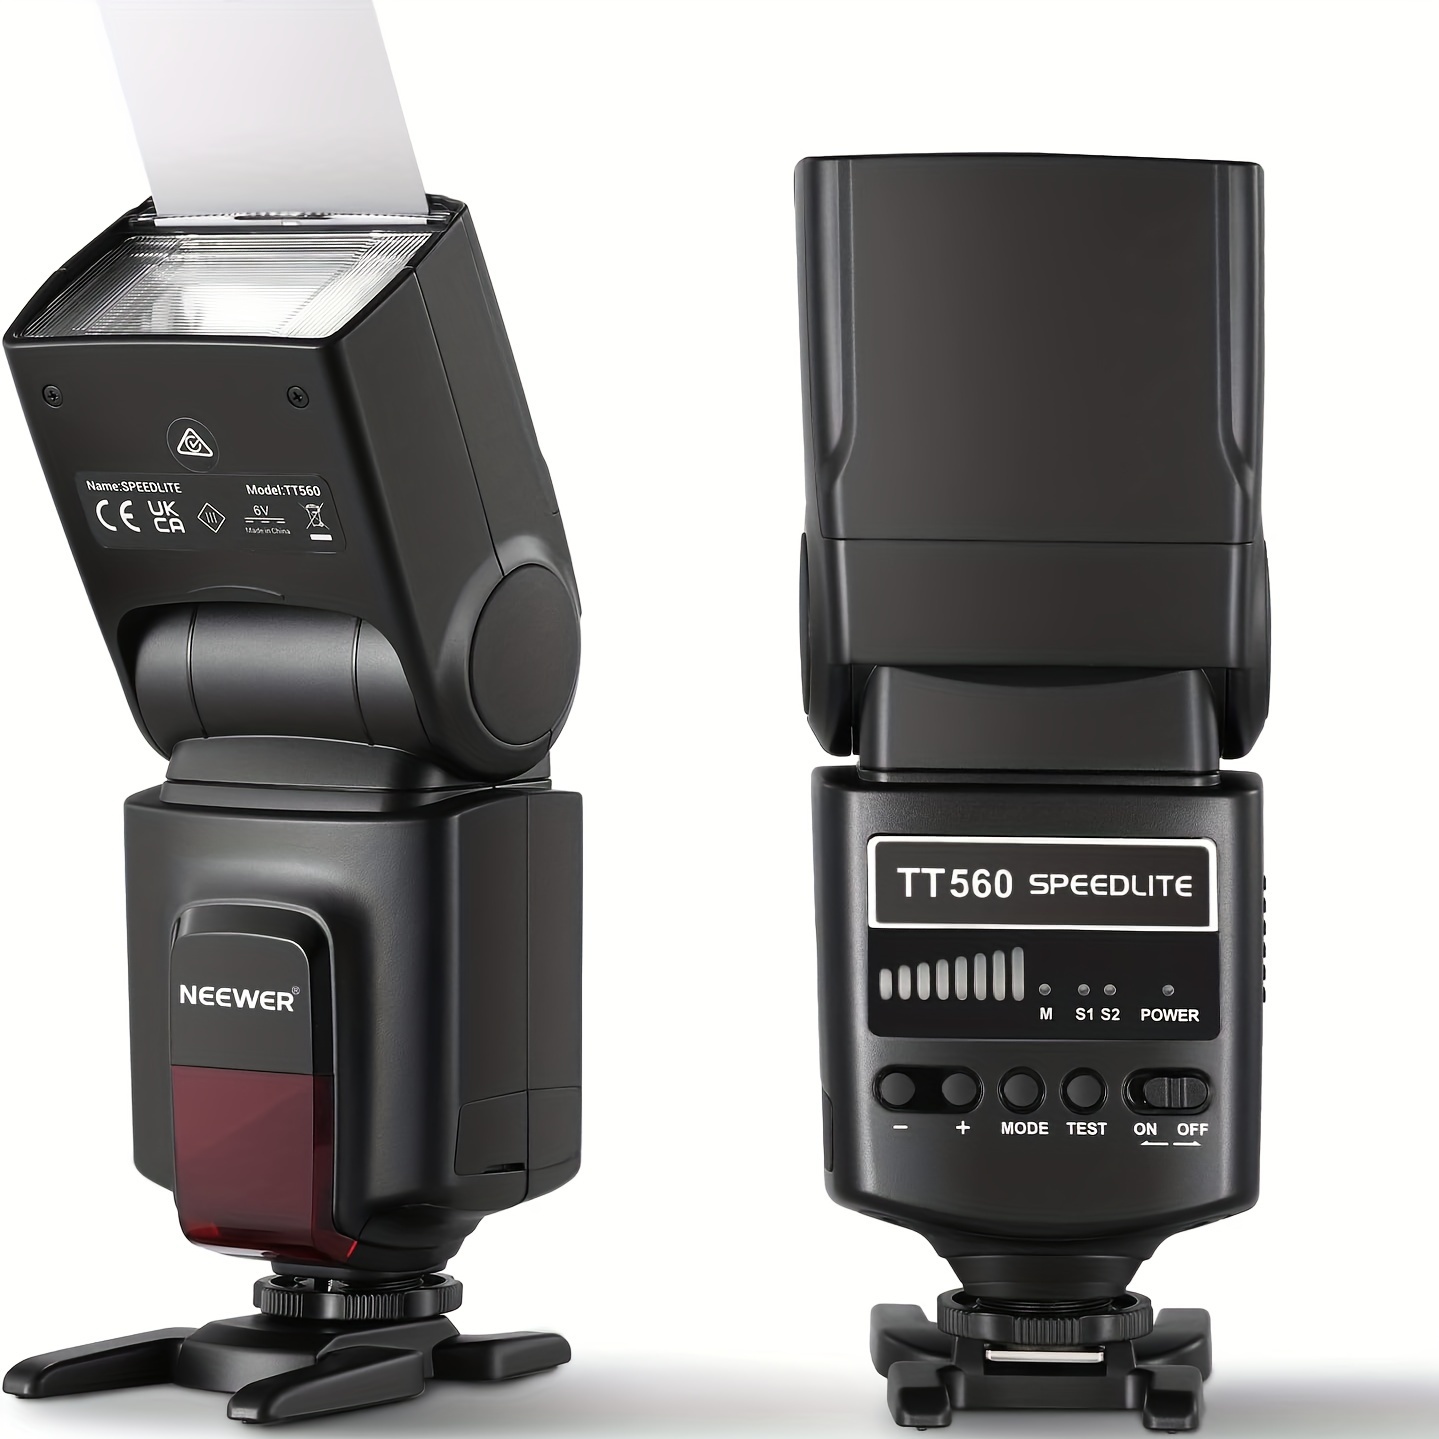 Neewer - Sistema de grabación de video para cámaras Canon, Nikon, Sony y  otras cámaras DSLR